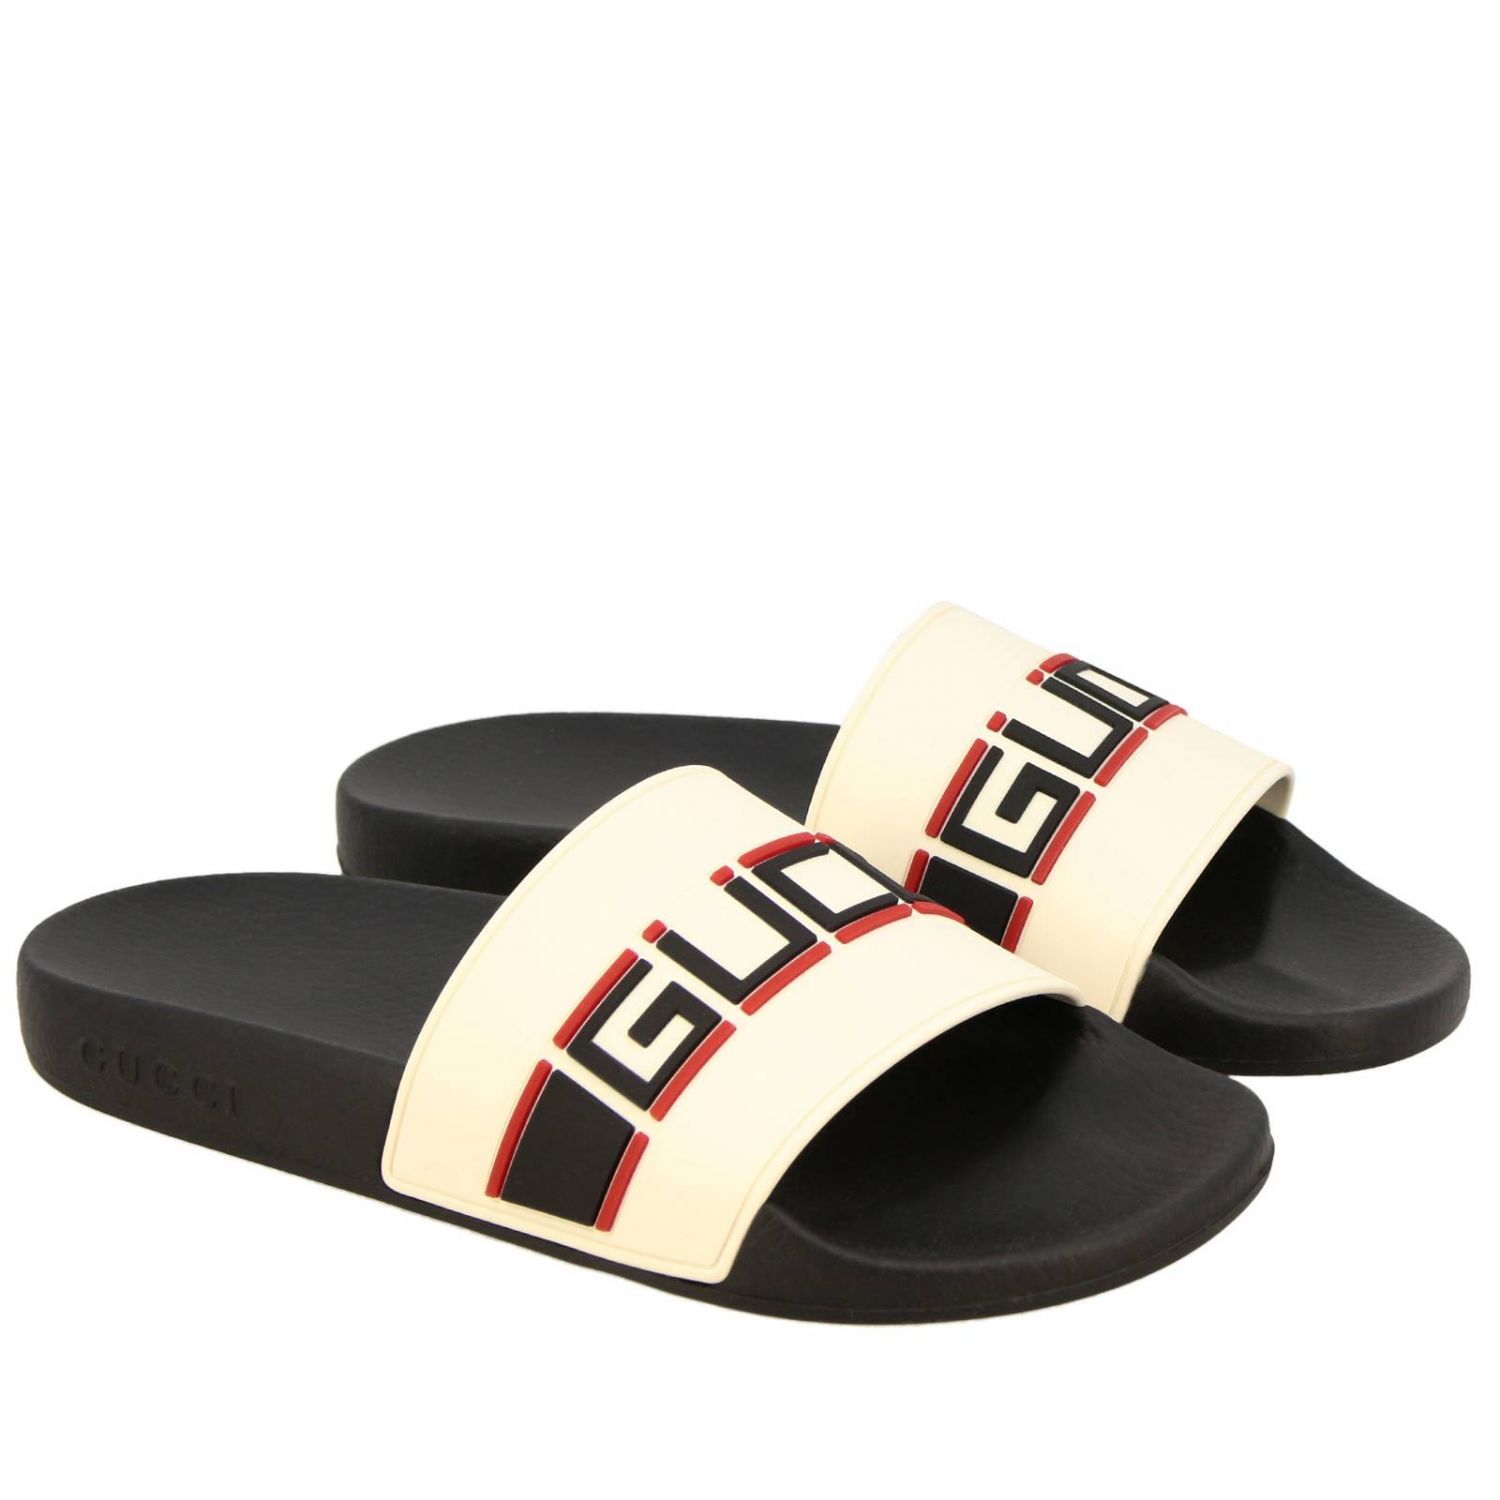 GUCCI: Pursuit slipper sandals with rubber band Sport | Flat Sandals ...